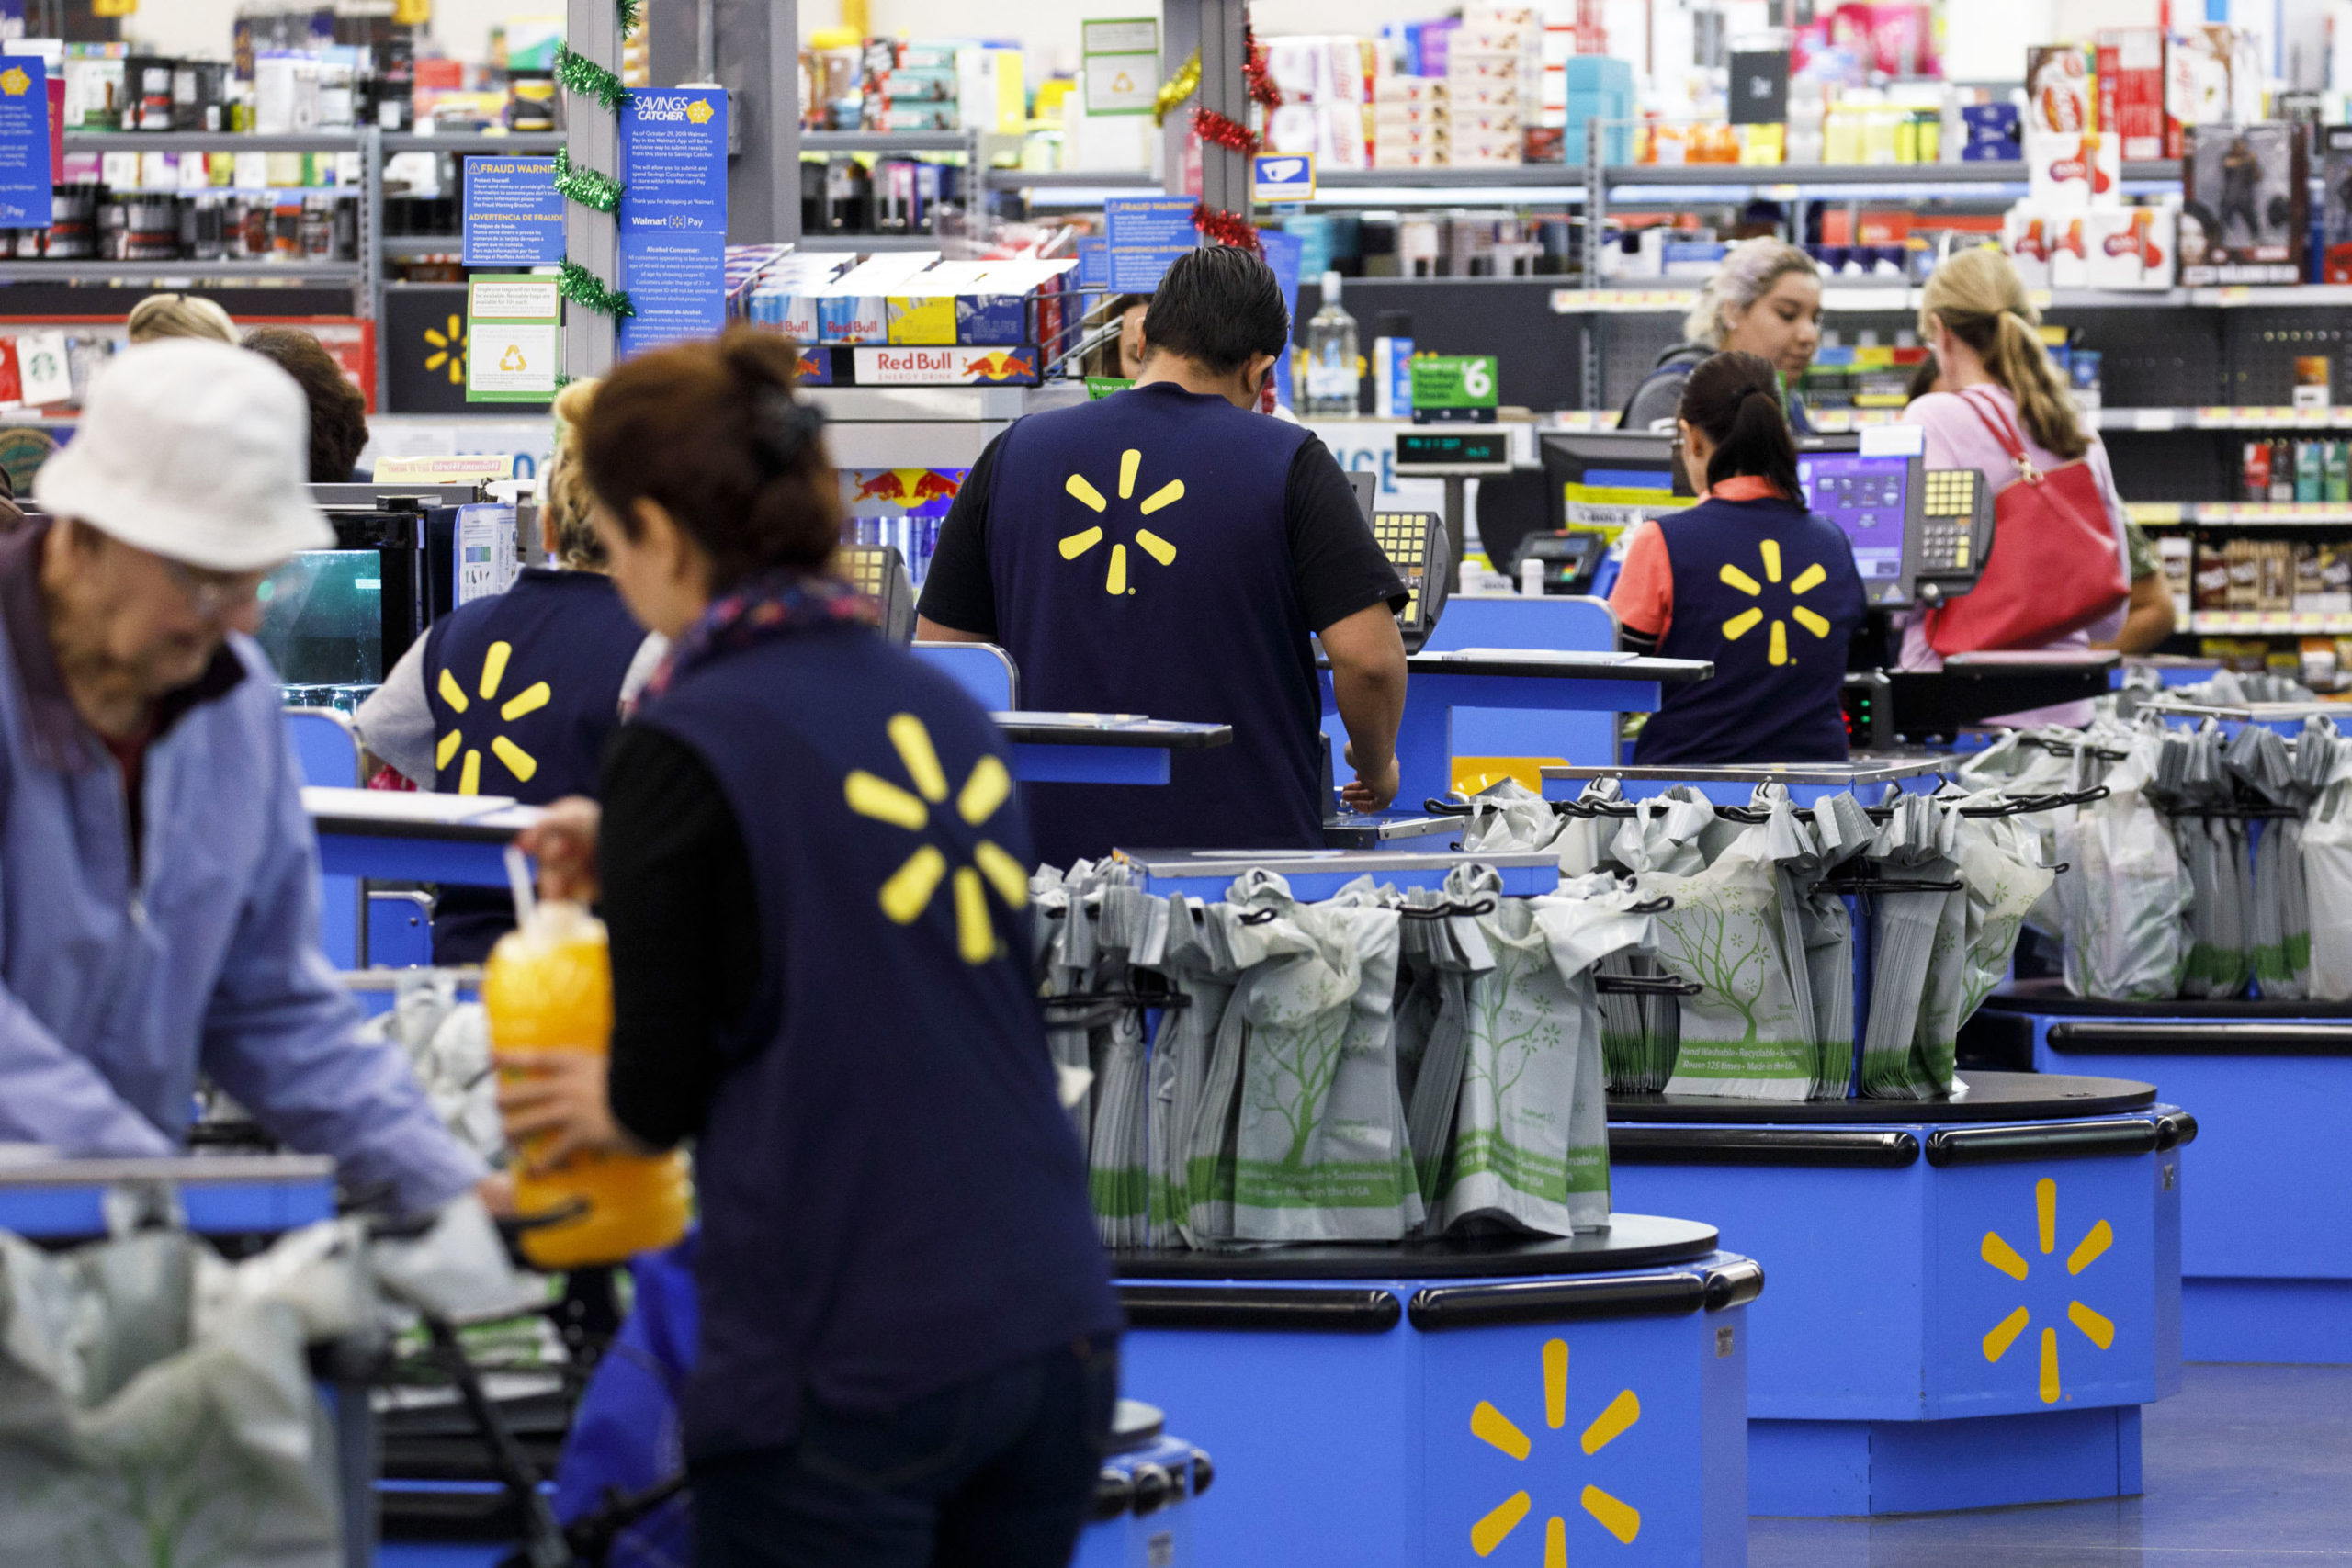 Walmart raises beginning hourly wage to $12 in 500 shops